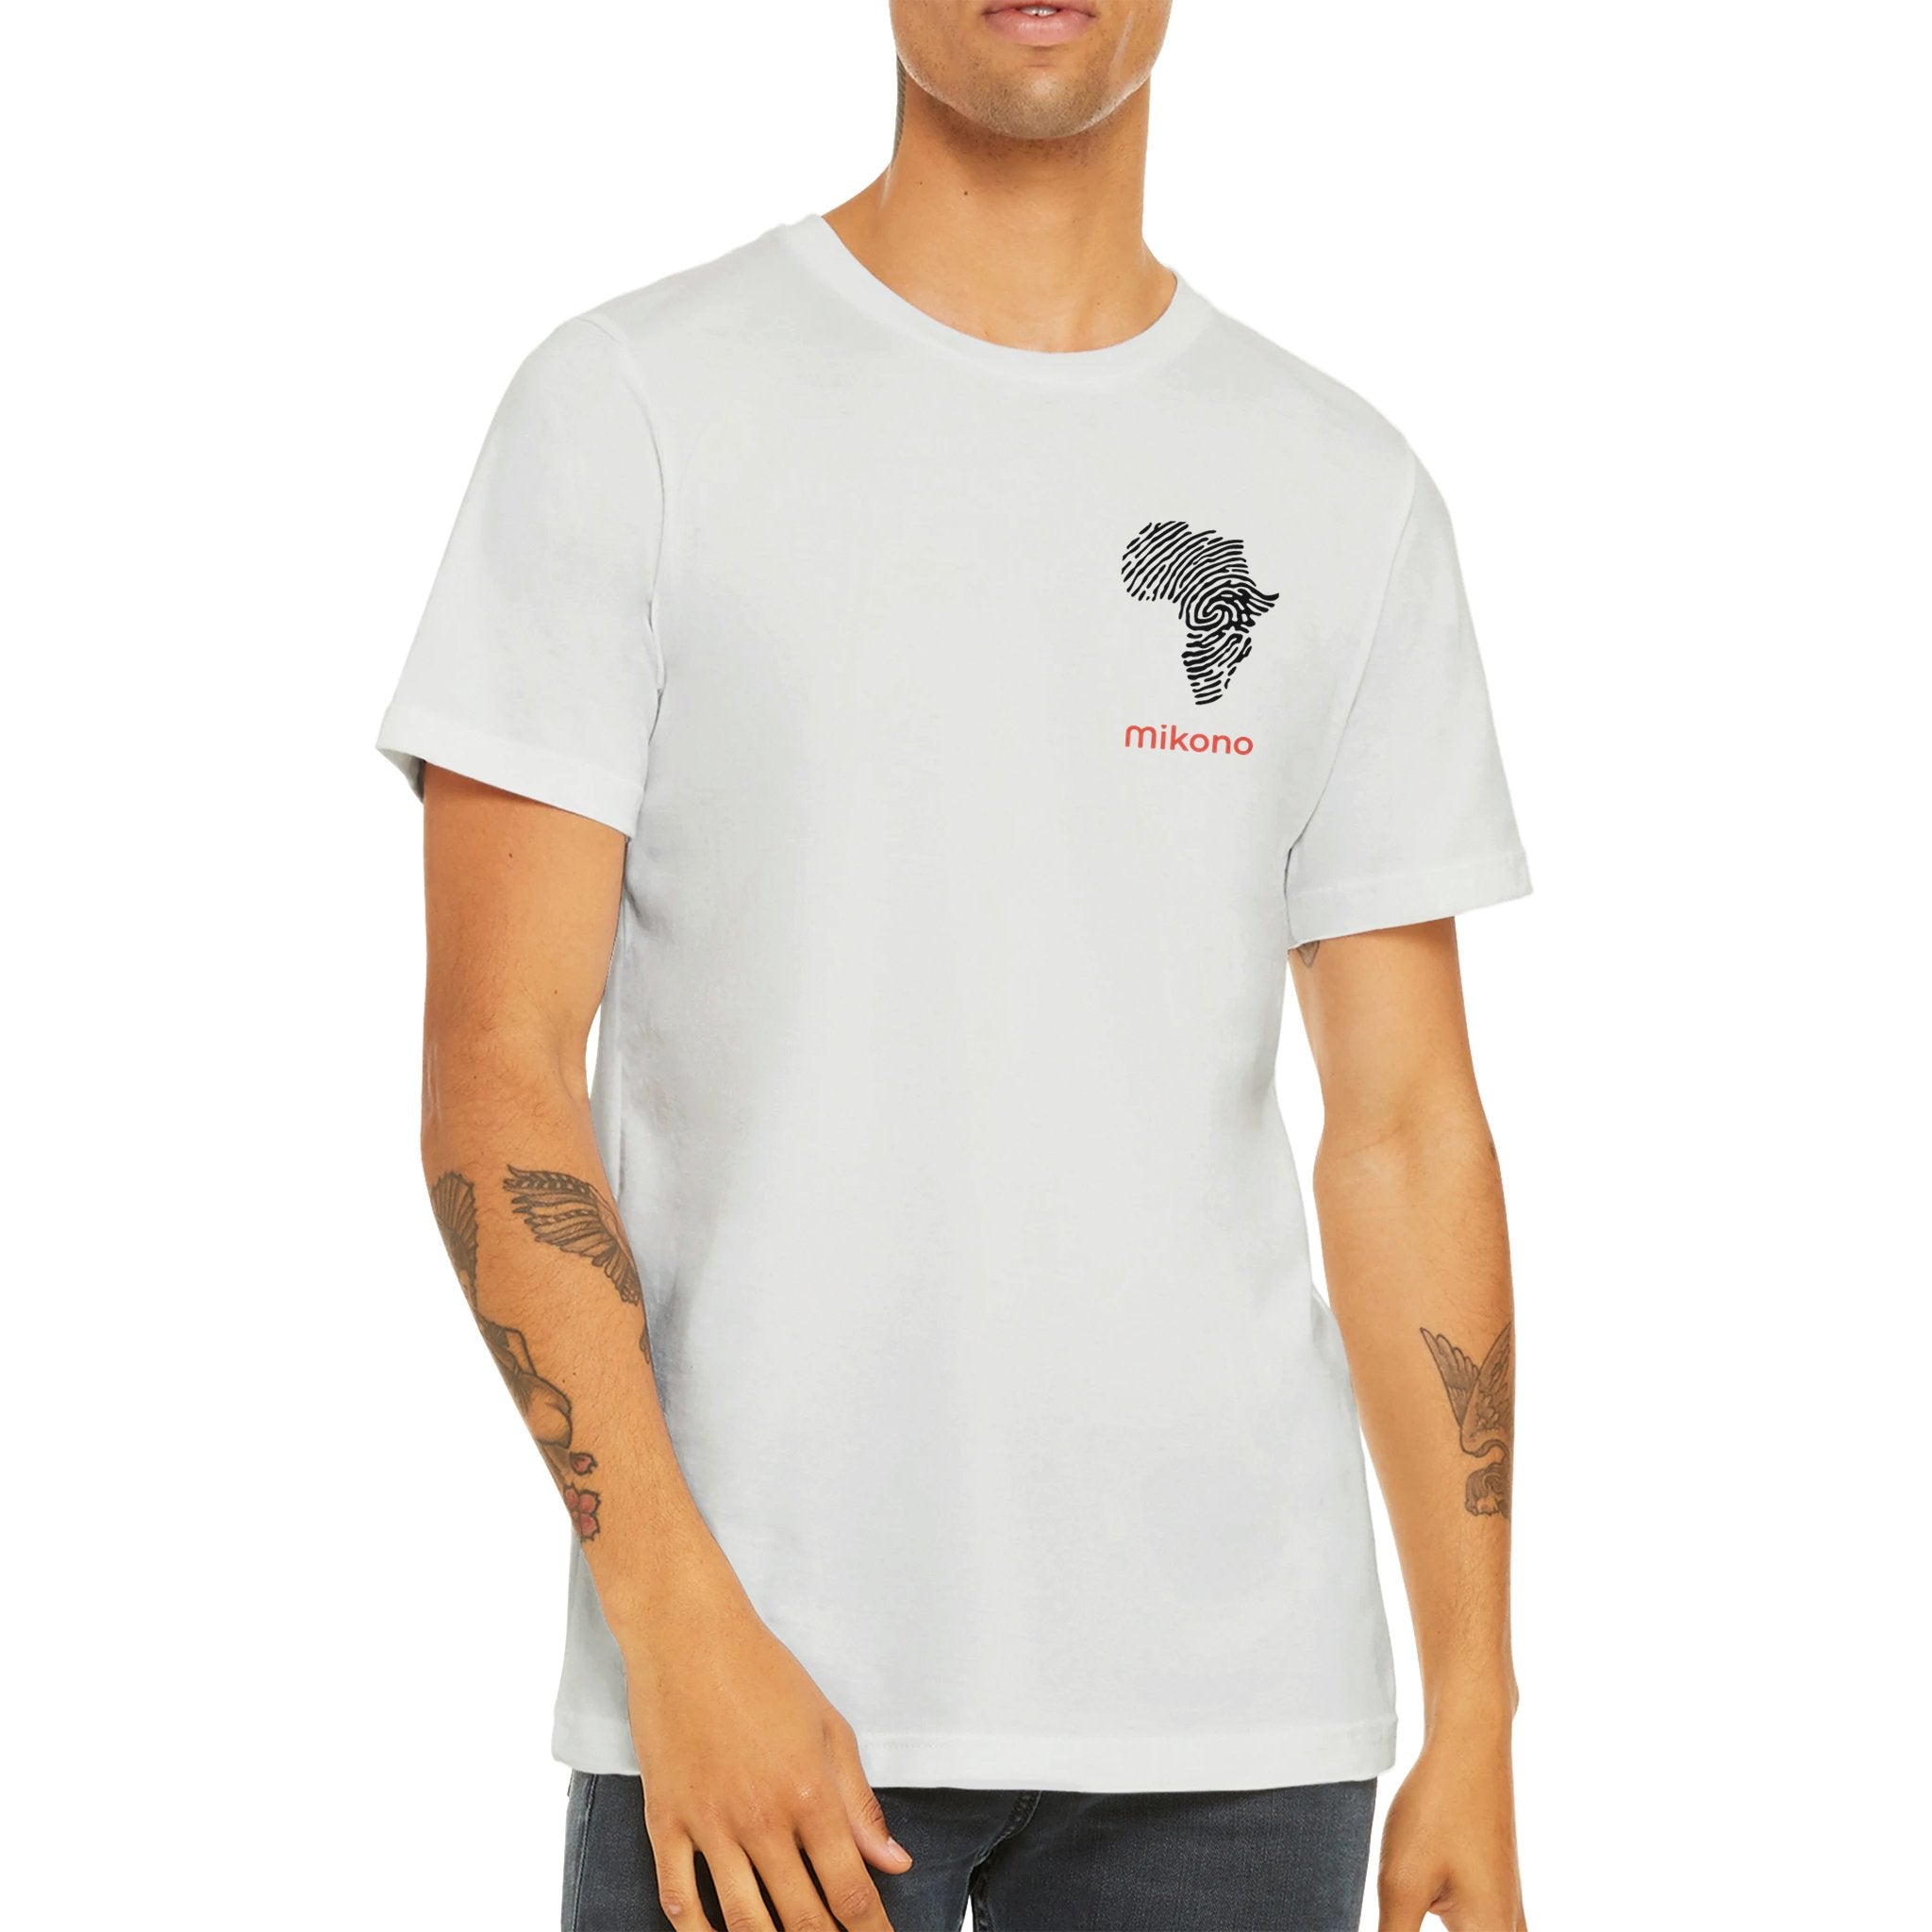 Premium Unisex Crewneck T-shirt - mikono.africa Jacken aus Kenia bunte Bomberjacke Partyjacke faire sozial nachhaltig designed in Kenia